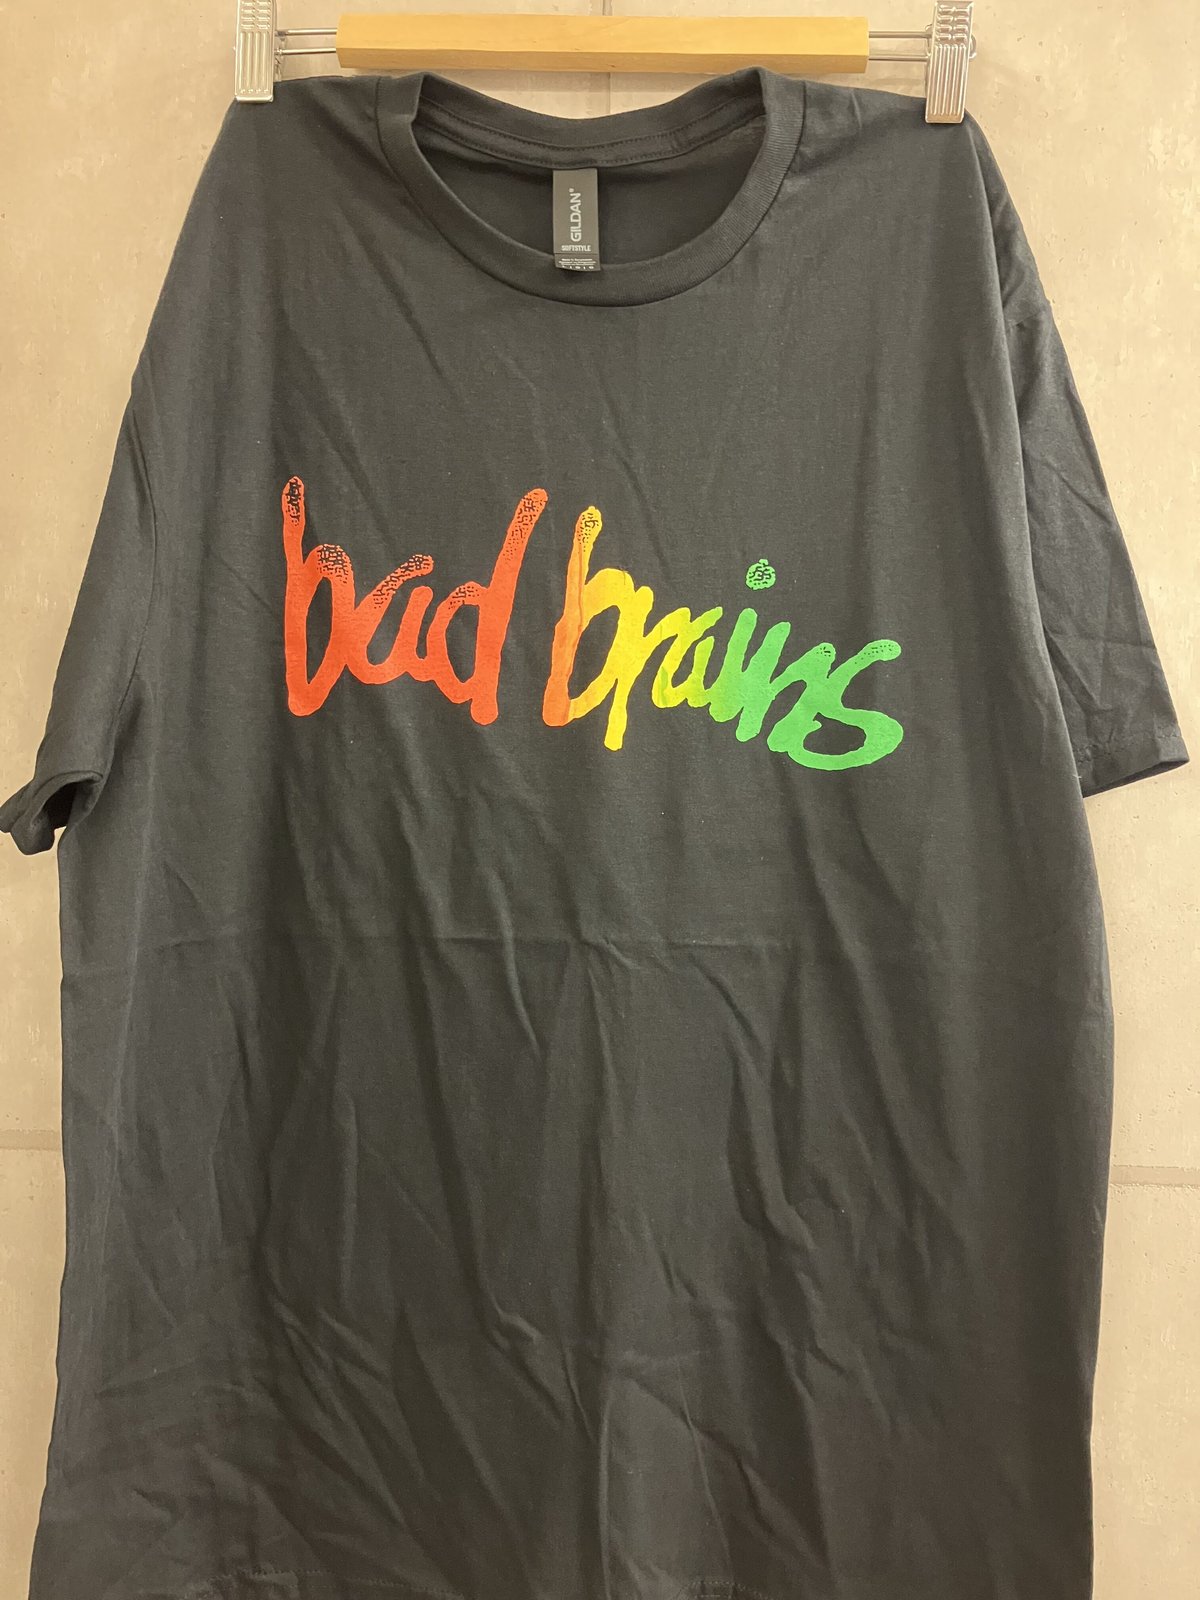 Bad Brains Hardcore Punk Heavy Metal Rock OFFICIAL Tee T-Shirt Mens Unisex